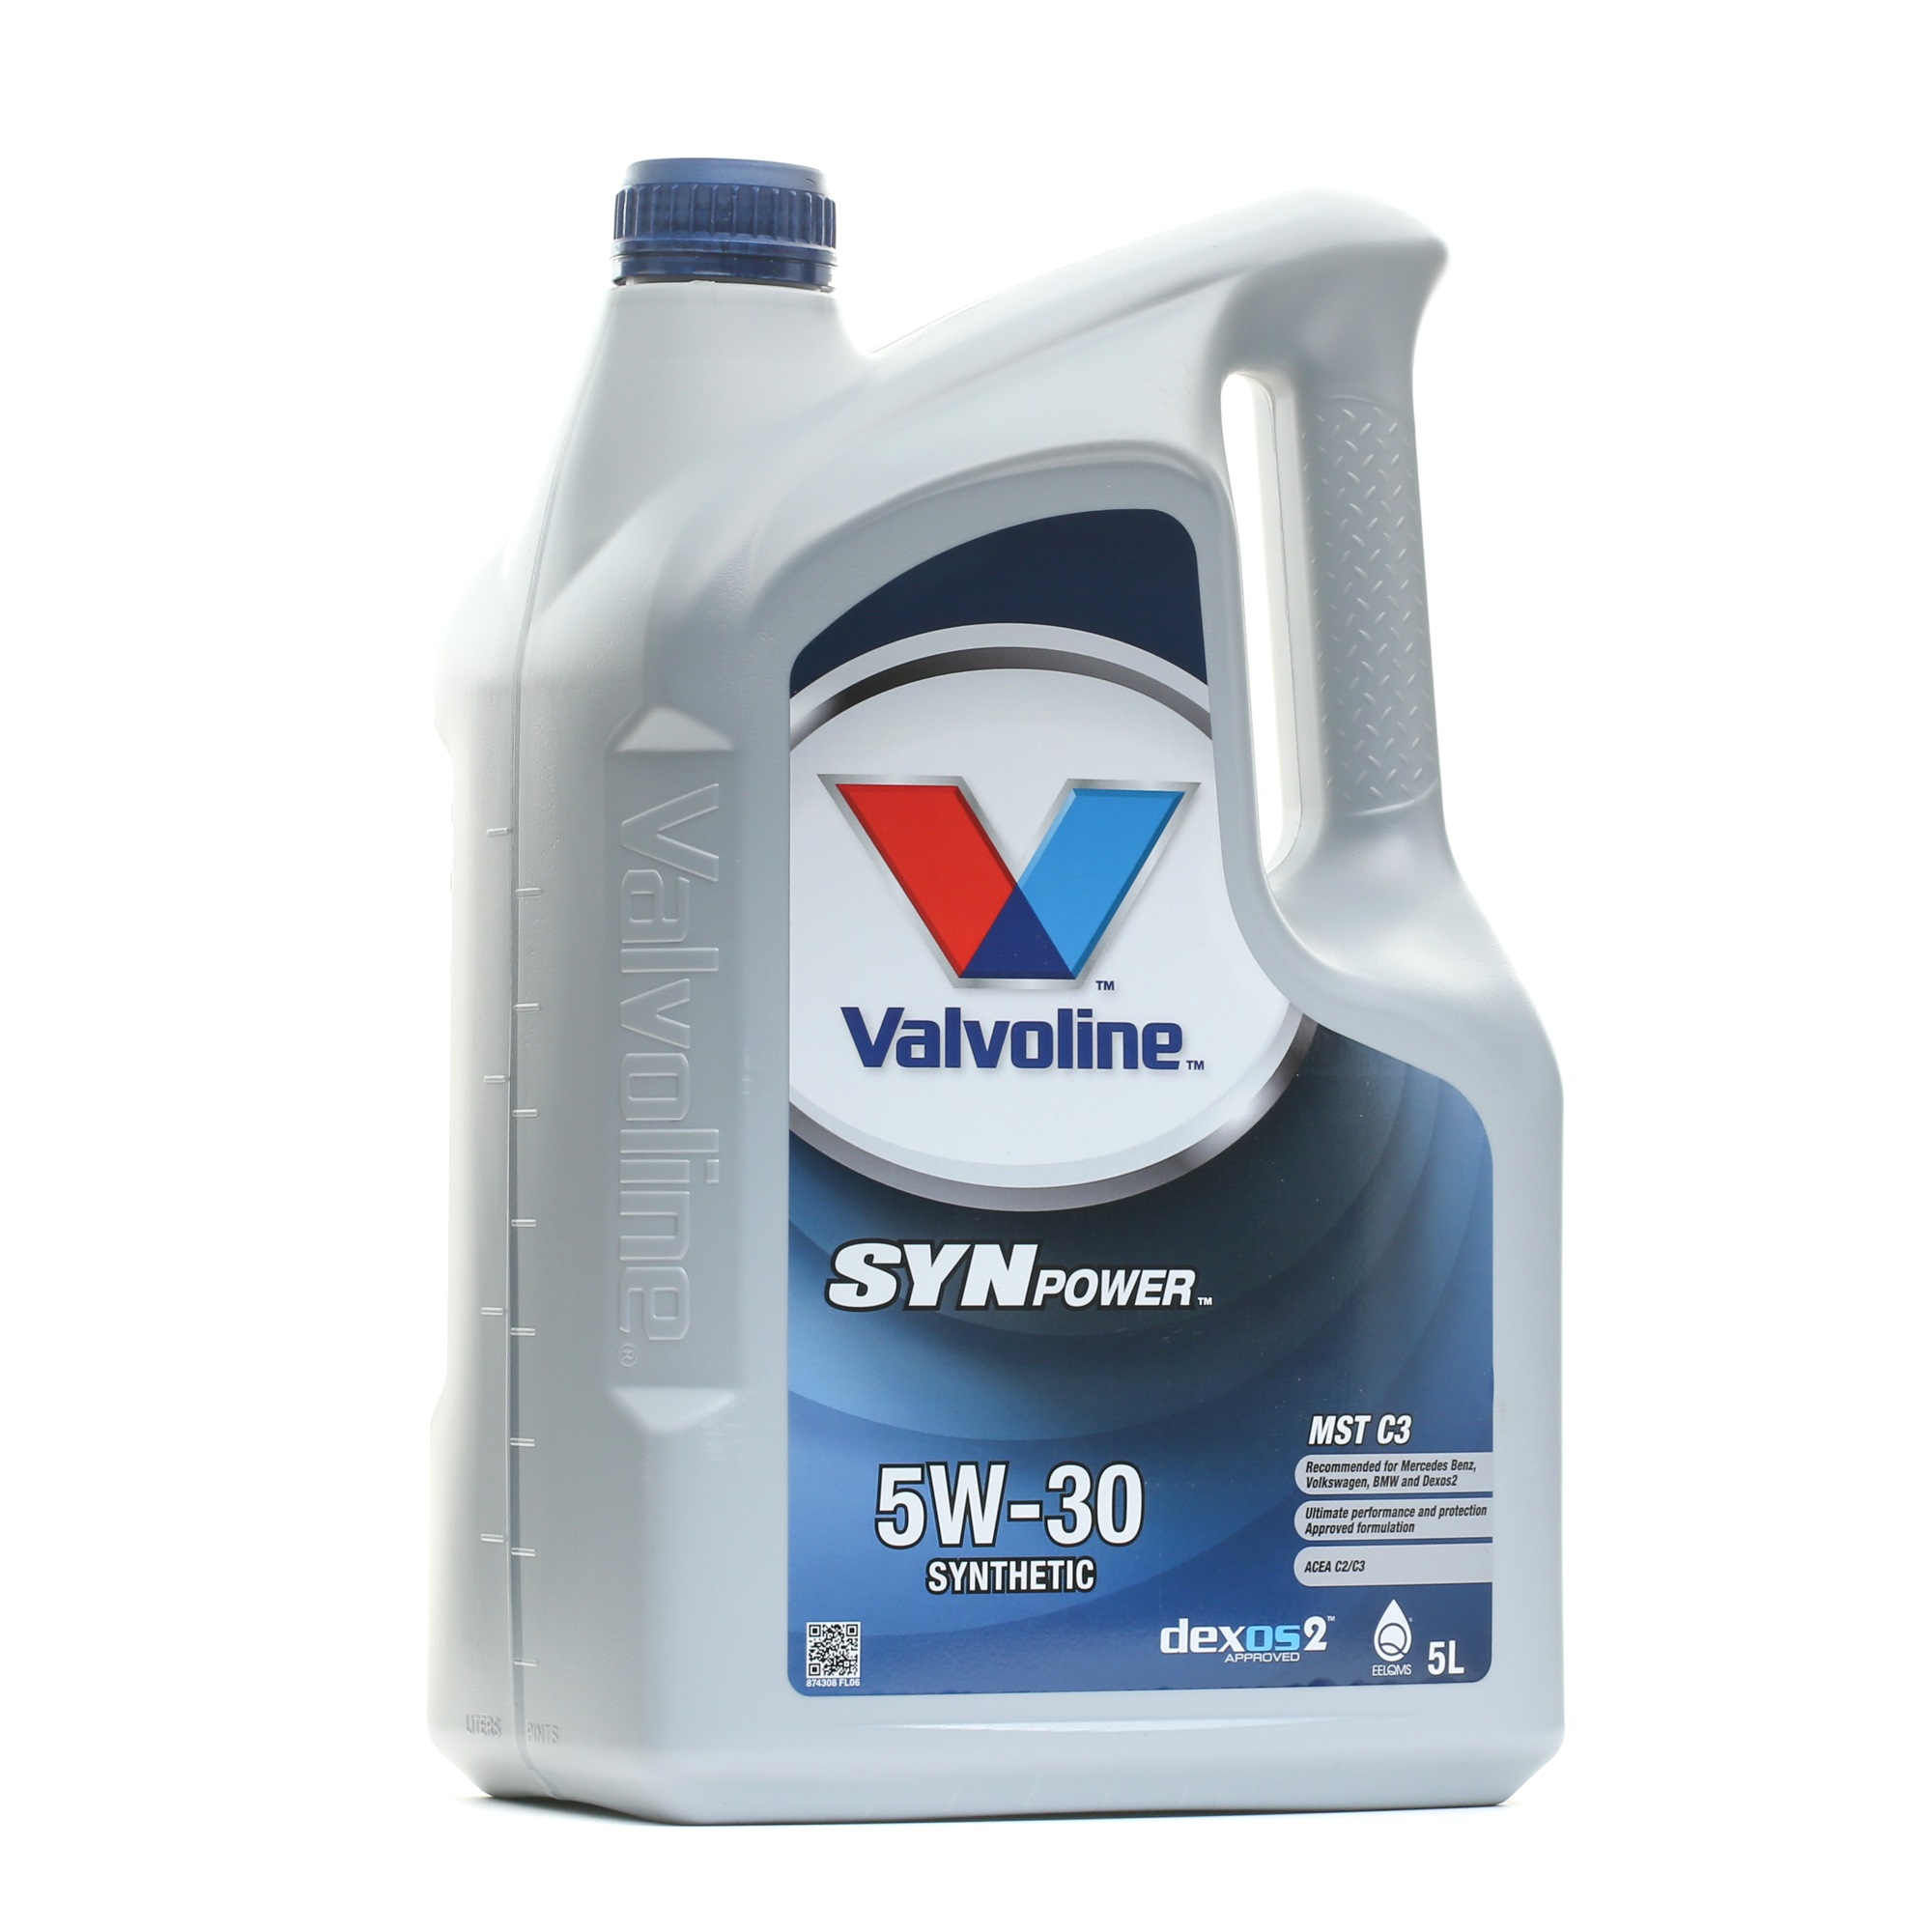 Car oil Valvoline 5W-30, 5l longlife 874308